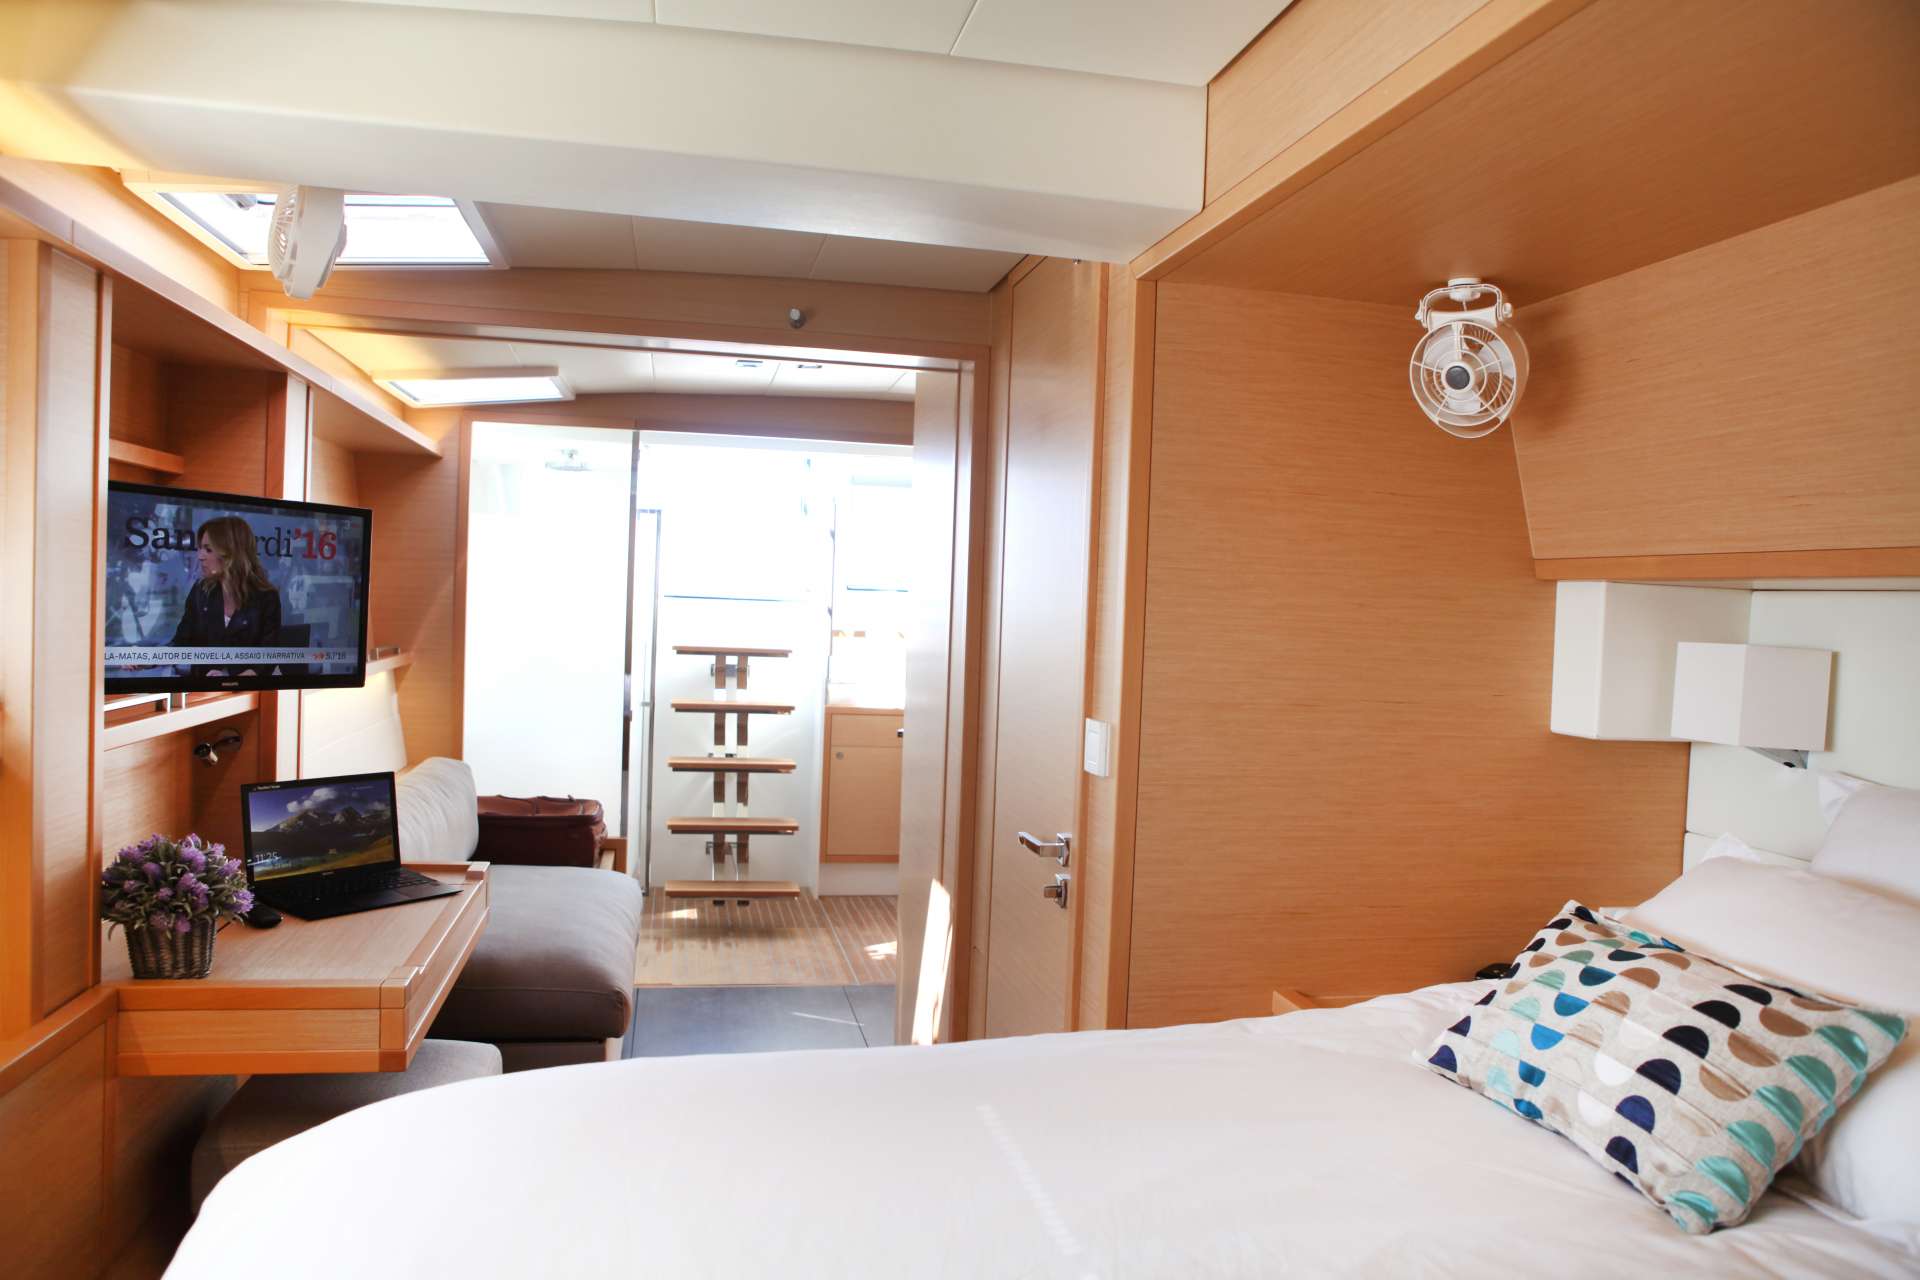 Catamaran Yacht 'LADY M' Primary Suite, 6 PAX, 2 Crew, 62.00 Ft, 18.00 Meters, Built 2015, Lagoon